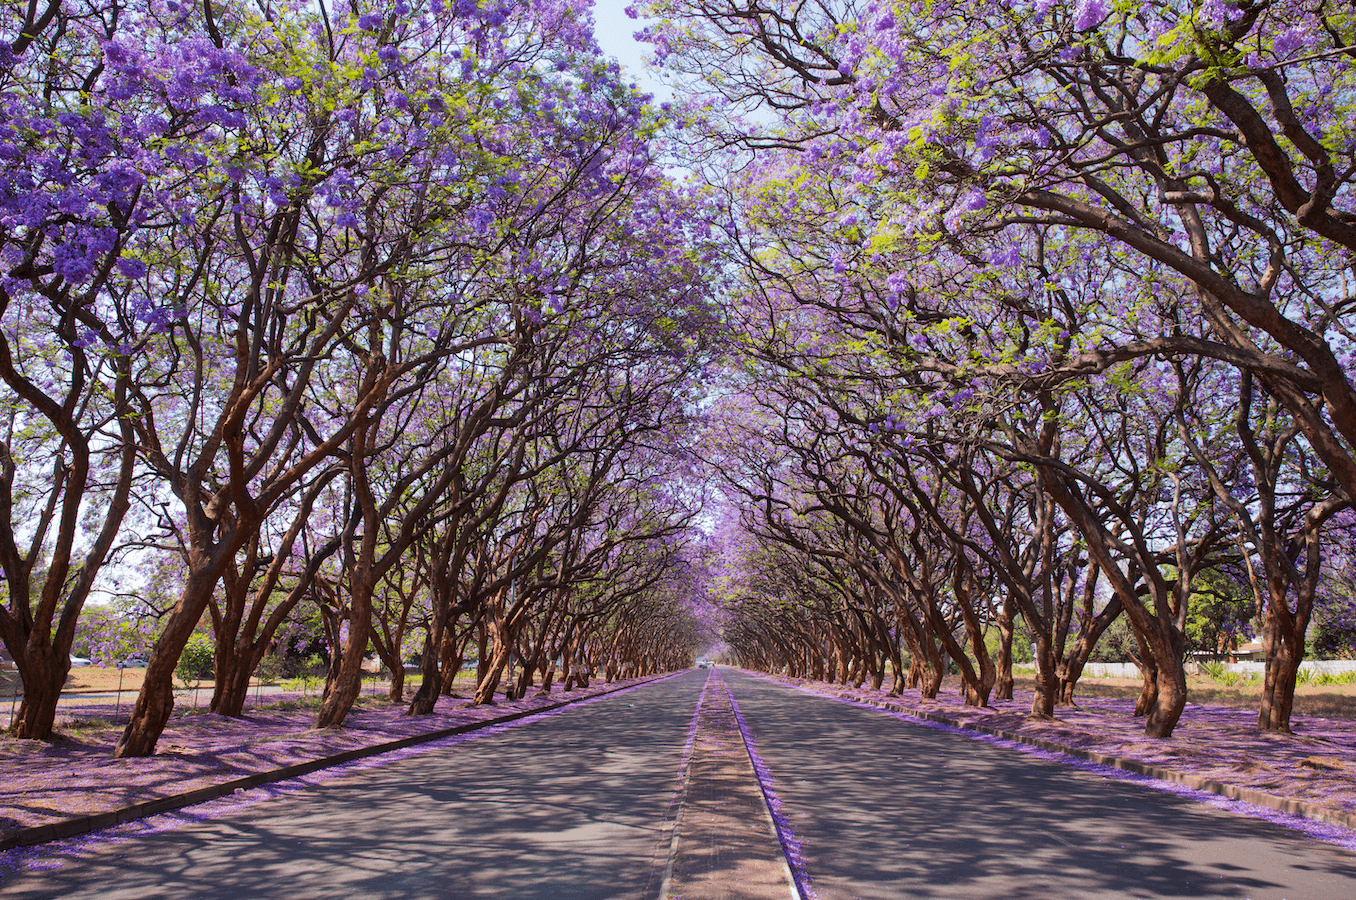 Blooming Jacaranda trees lining Milton Avenue in Harare, Zimbabwe